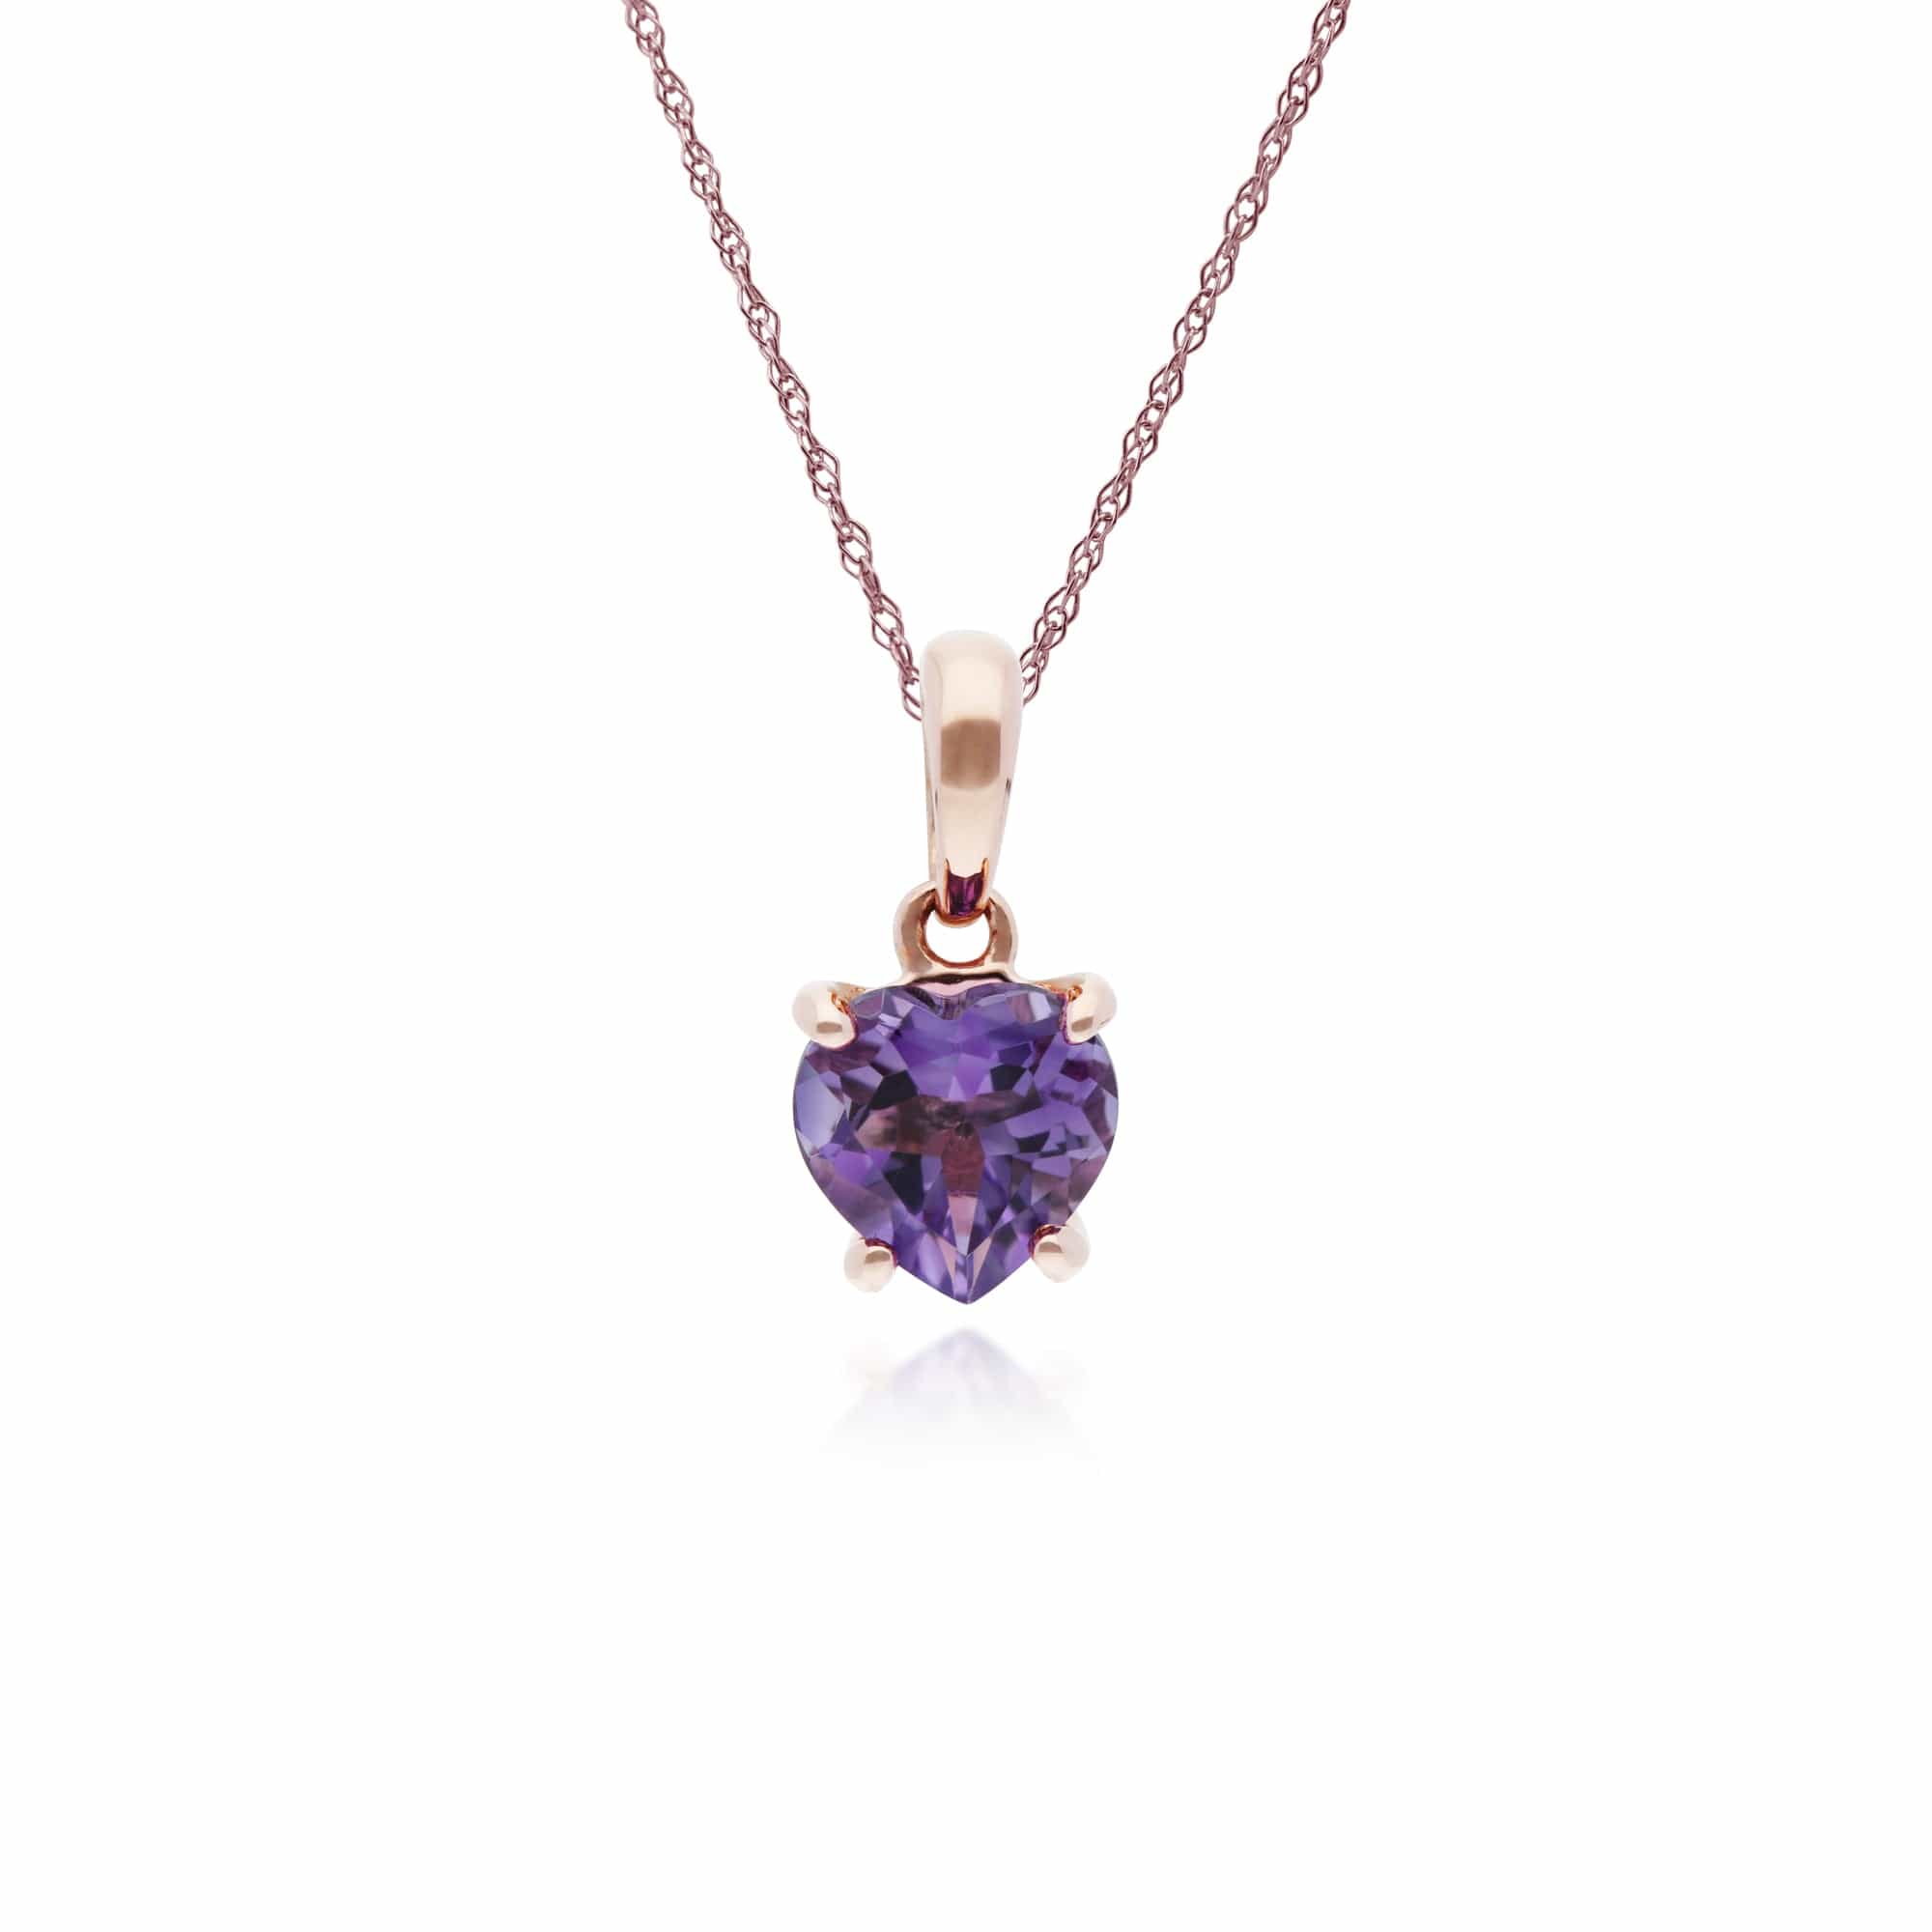 Gemondo 9ct Rose Gold Claw Set Amethyst Heart Pendant on 45cm Chain - Gemondo